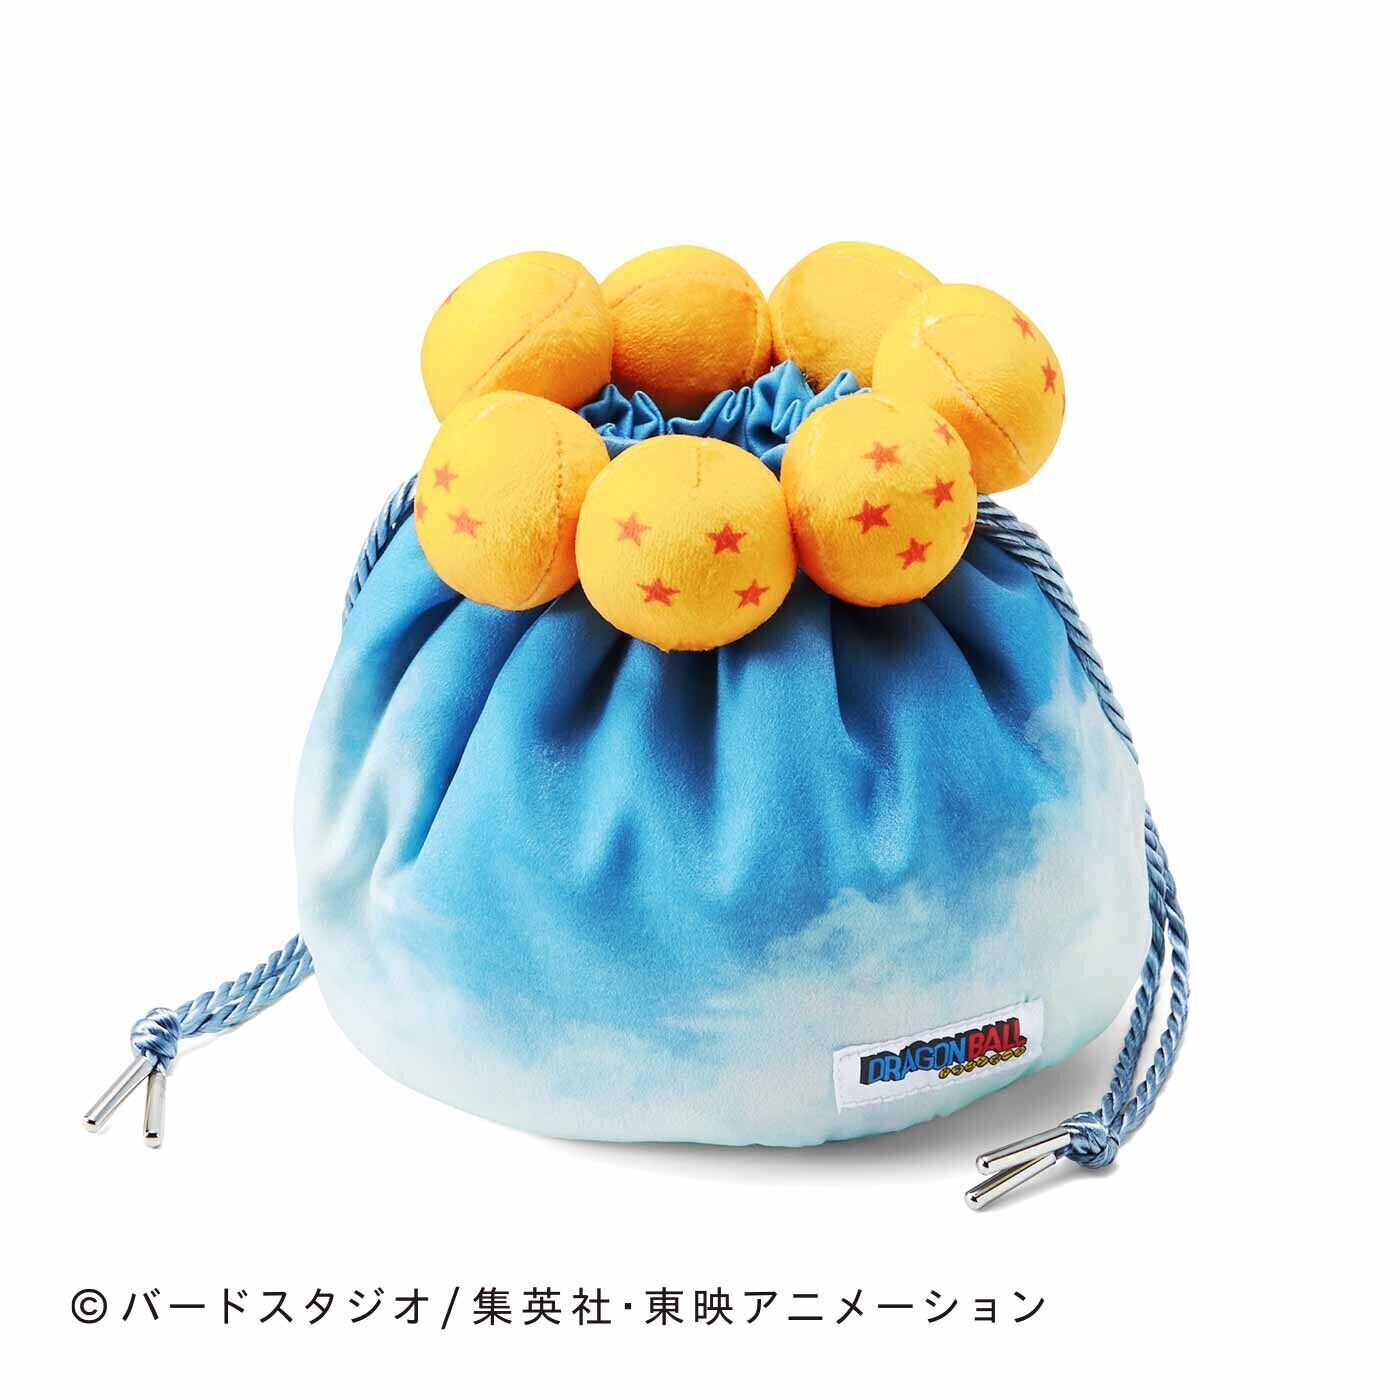 [NEW] Dragon Ball Shenlong kinchaku pouch Bag limited From Japan pre-order